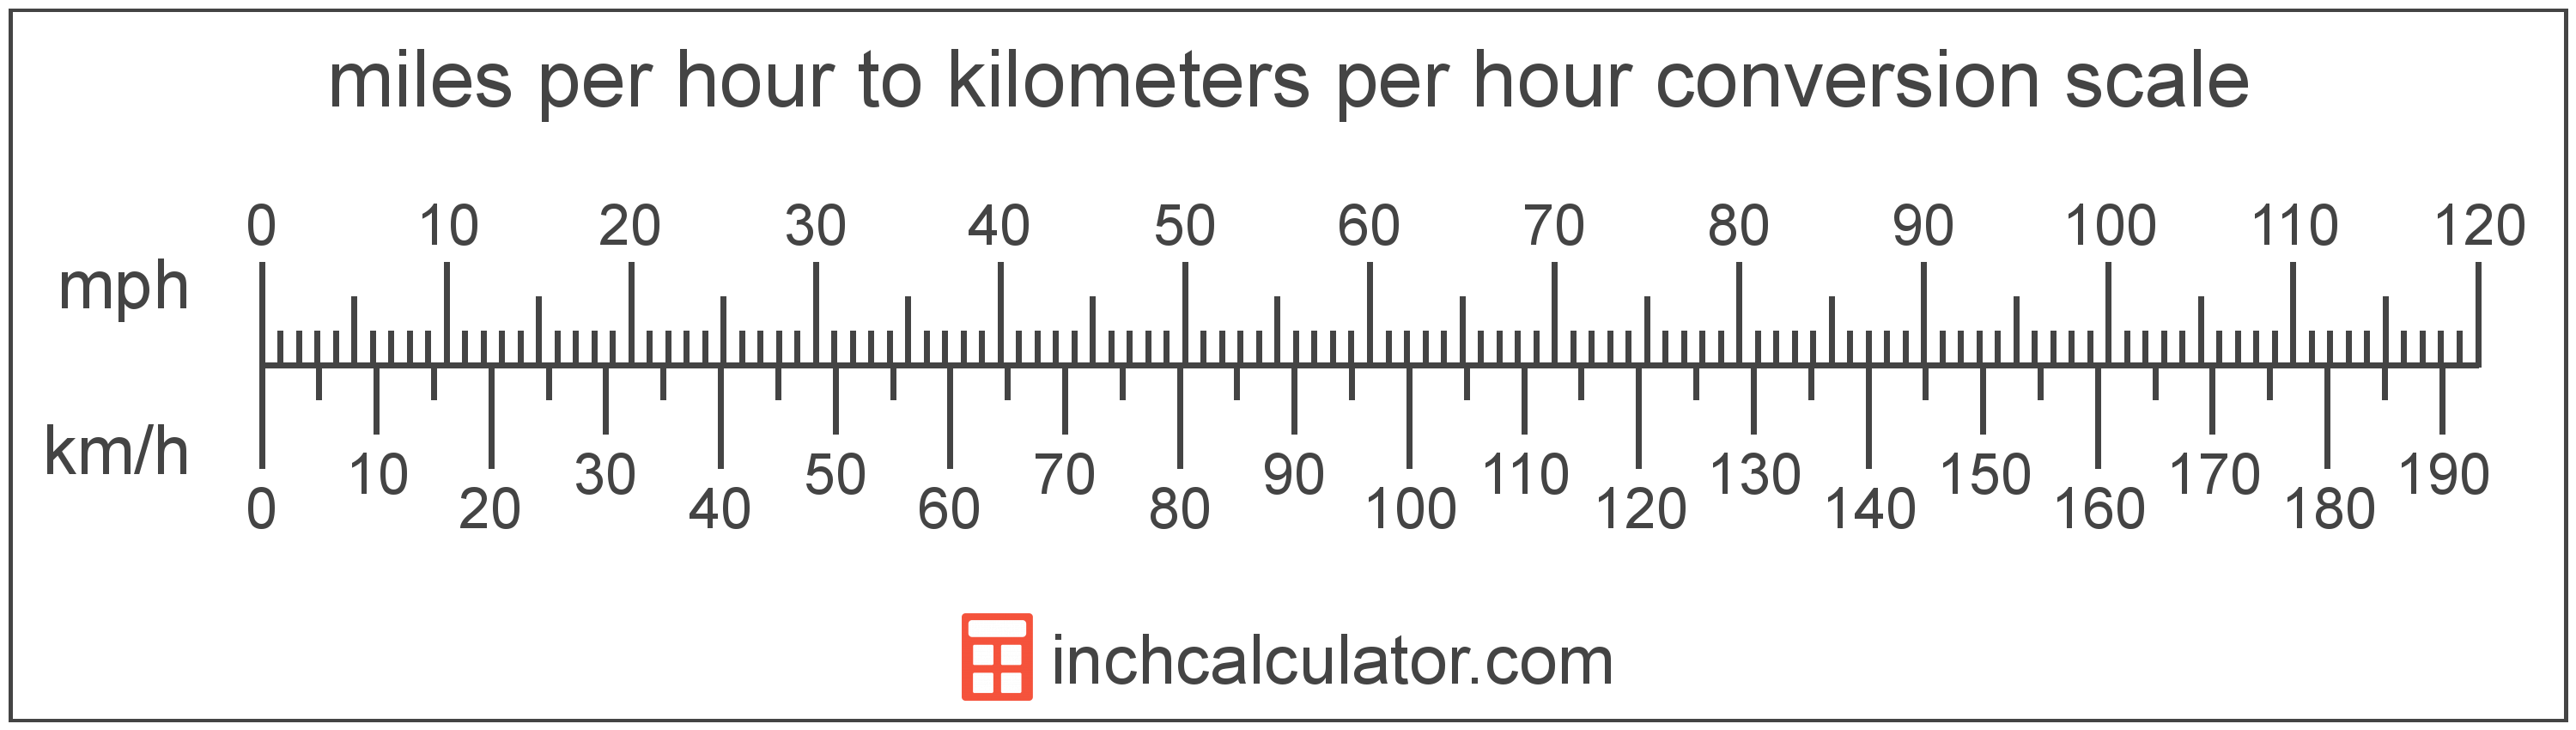 mph to kph Conversion (Miles per Hour To Kilometers per Hour)